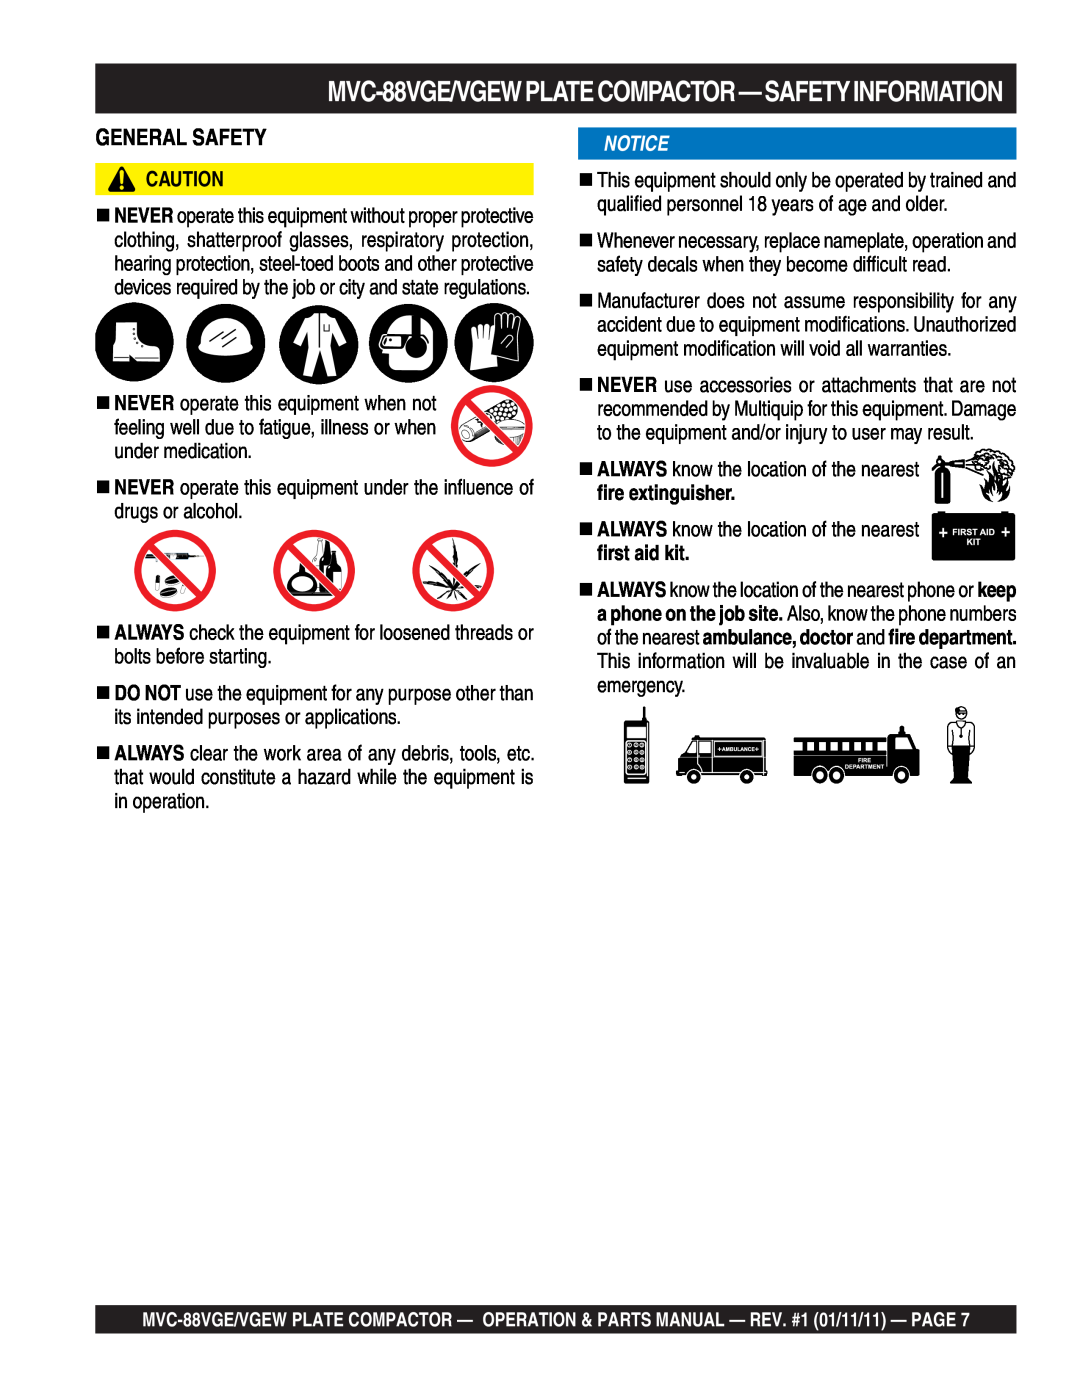 Multiquip manual MVC-88VGE/VGEWPLATECOMPACTOR-SAFETYINFORMATION, General Safety, ﬁre extinguisher, ﬁrst aid kit 